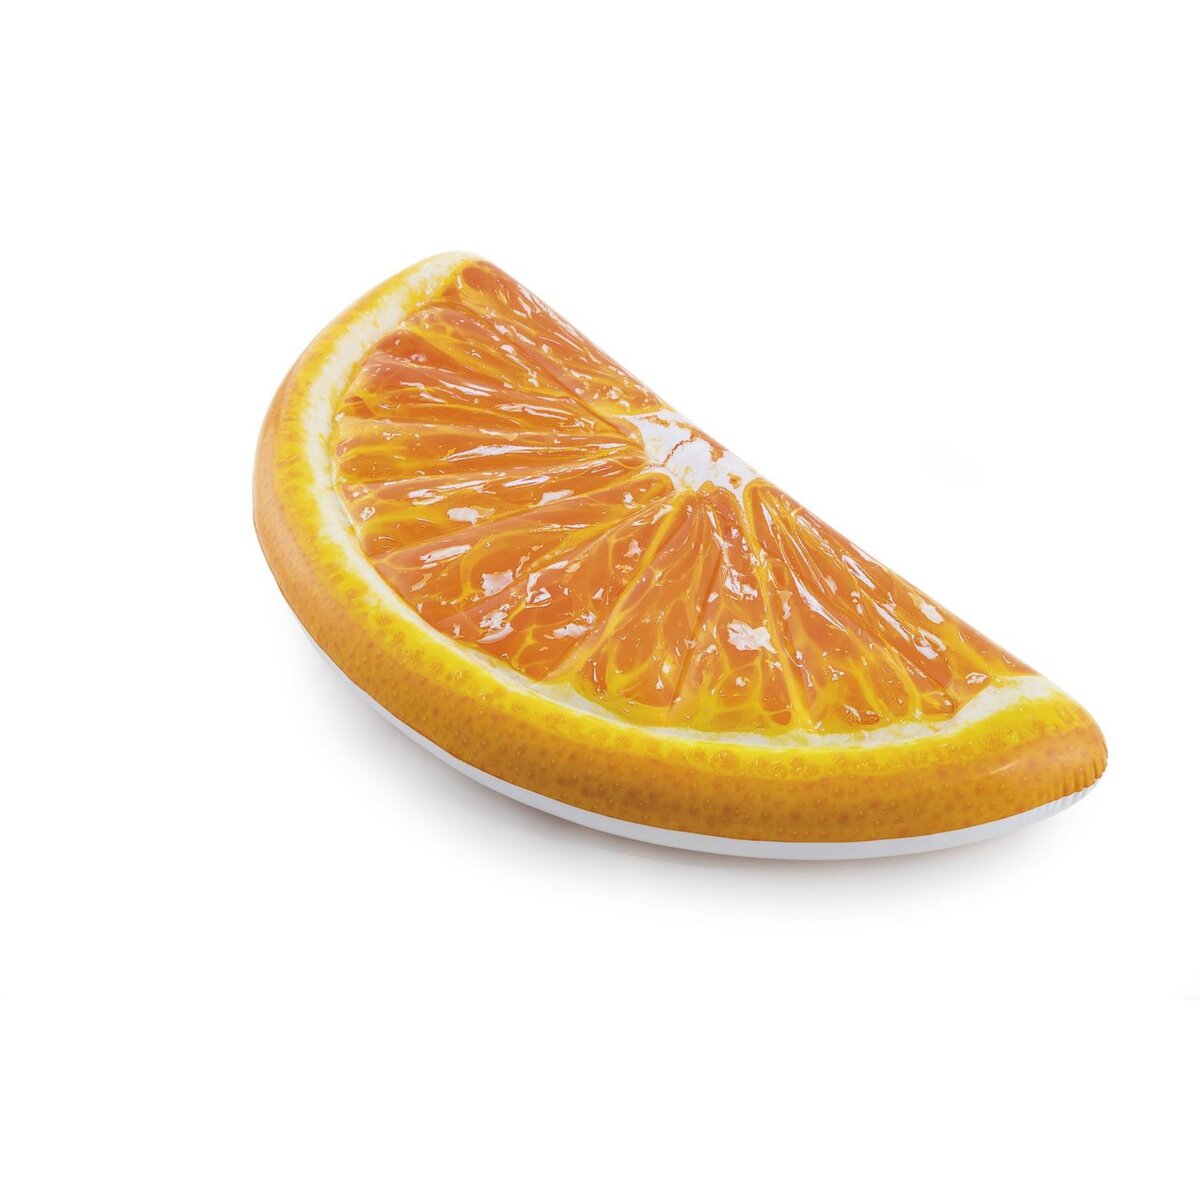 INTEX Matelas gonflable Orange - L. 178 cm